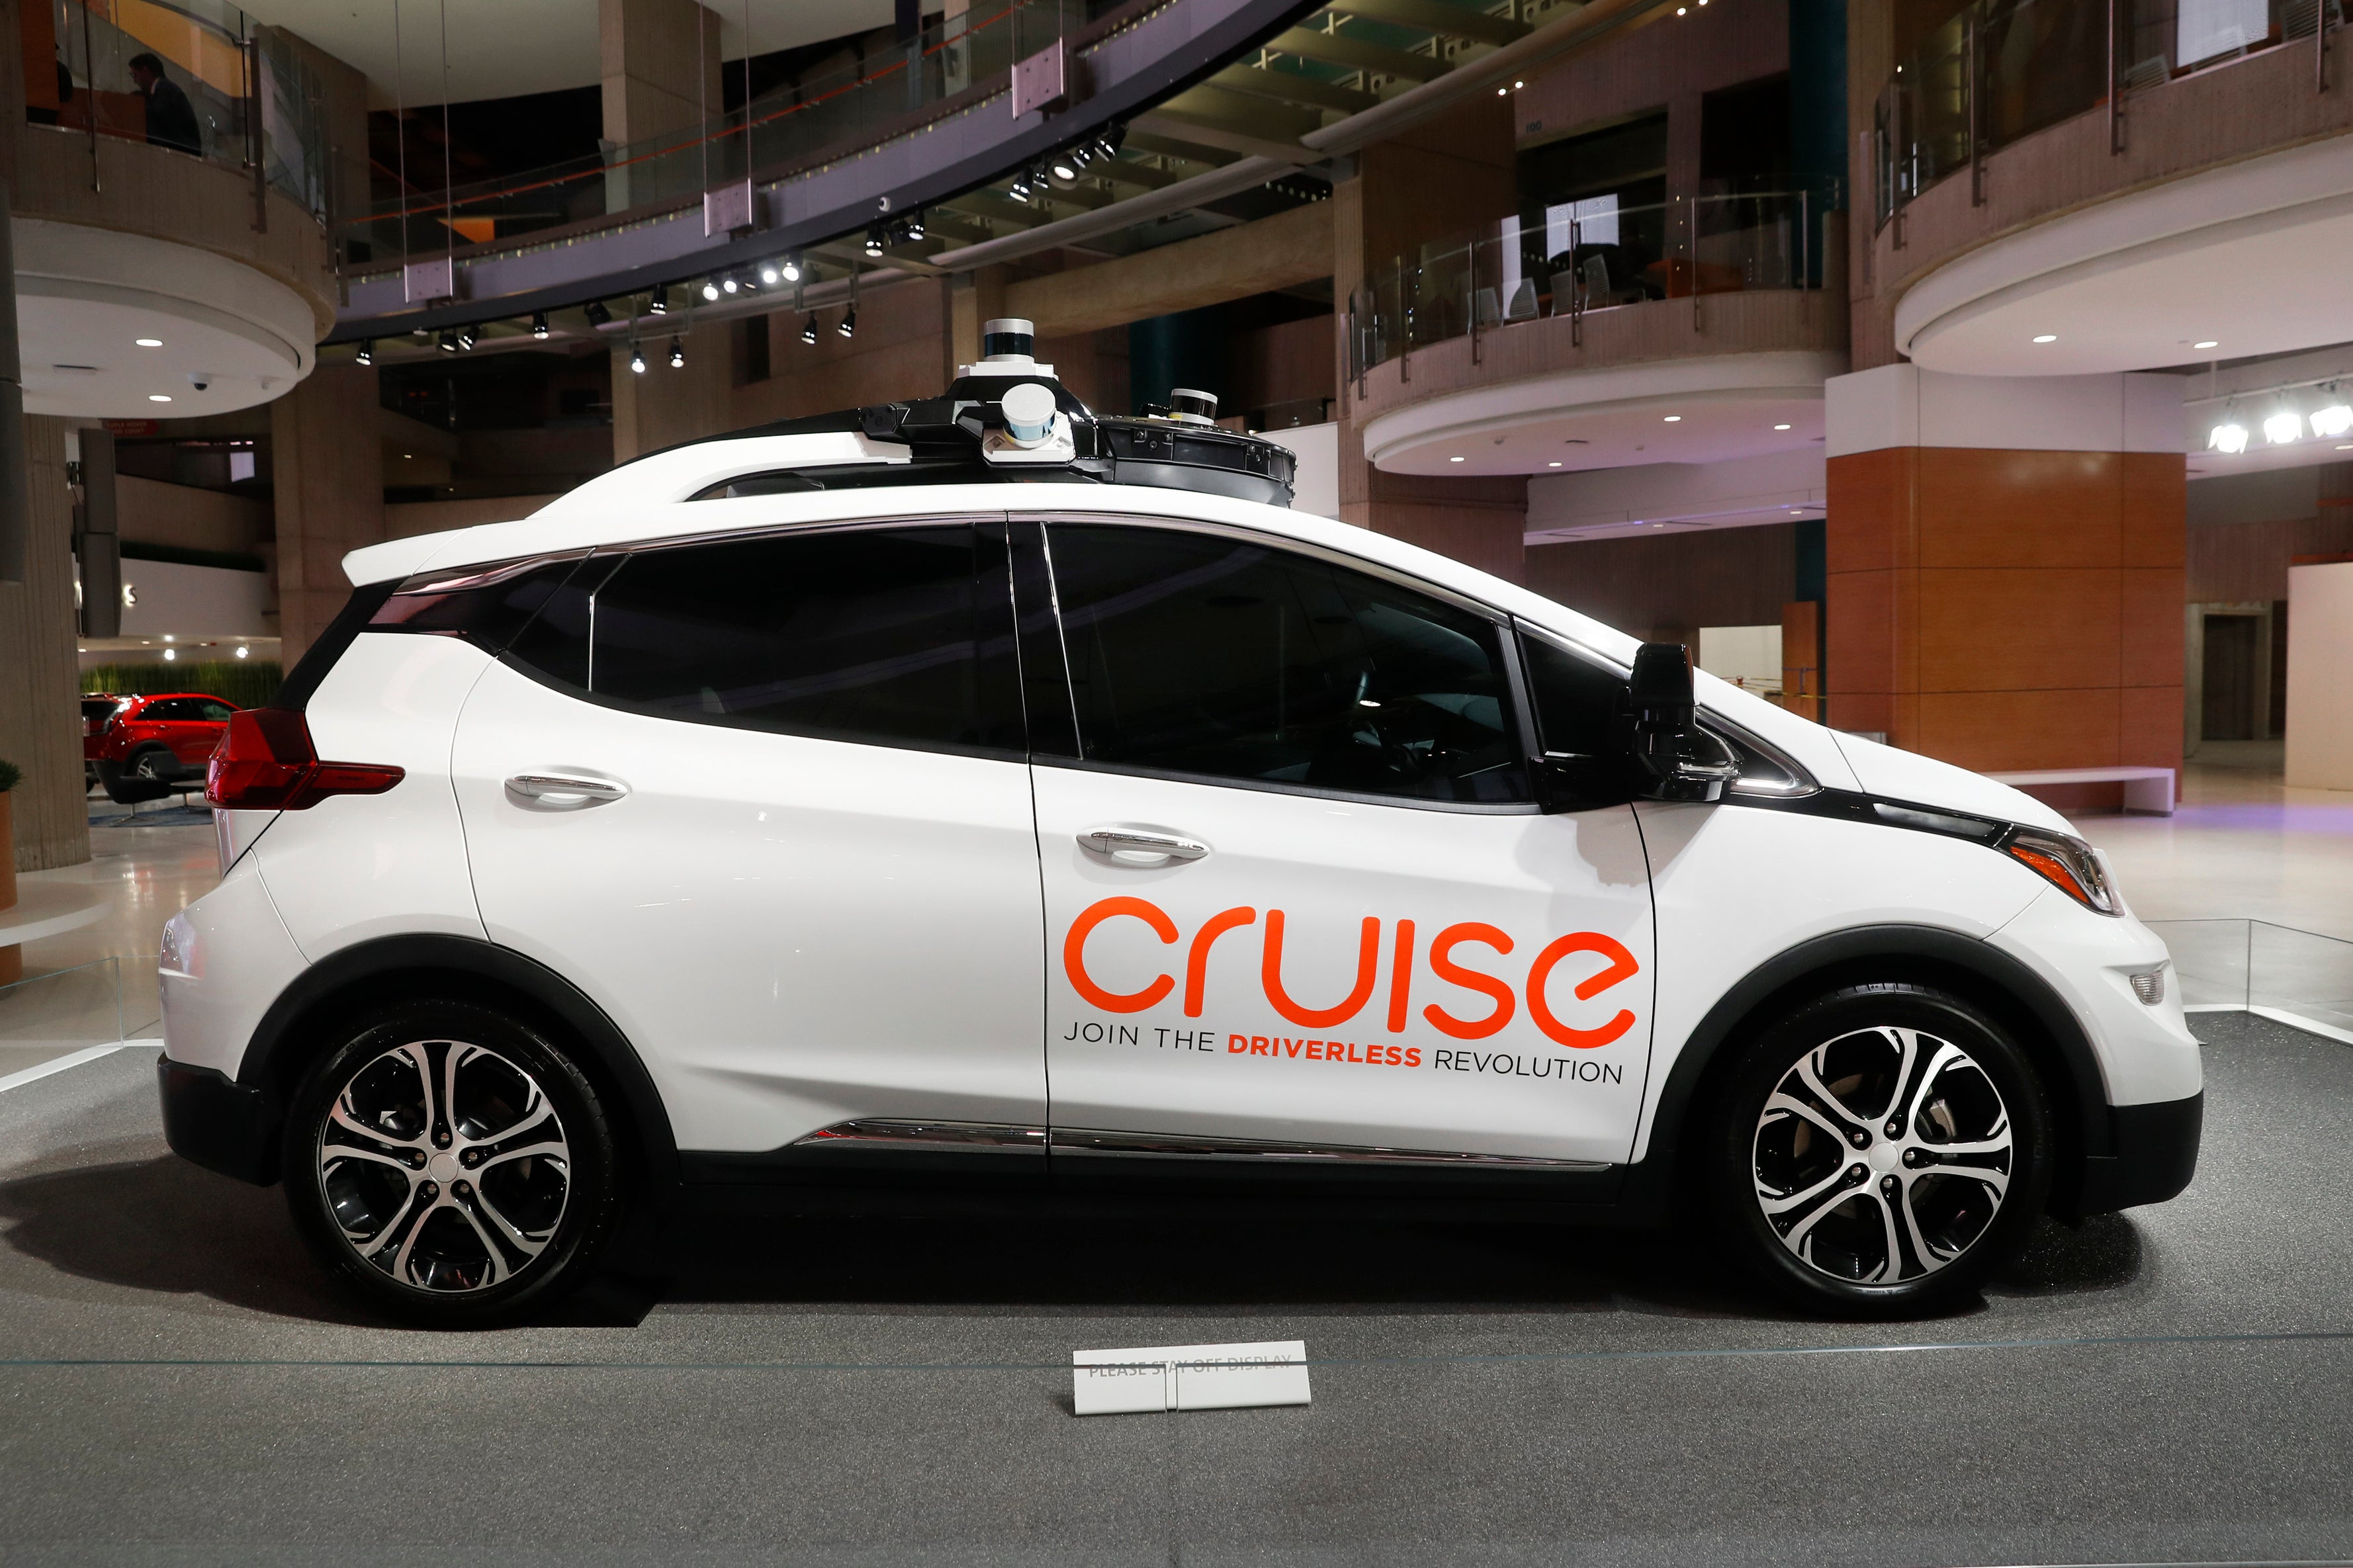 Cruise-Driverless Cars